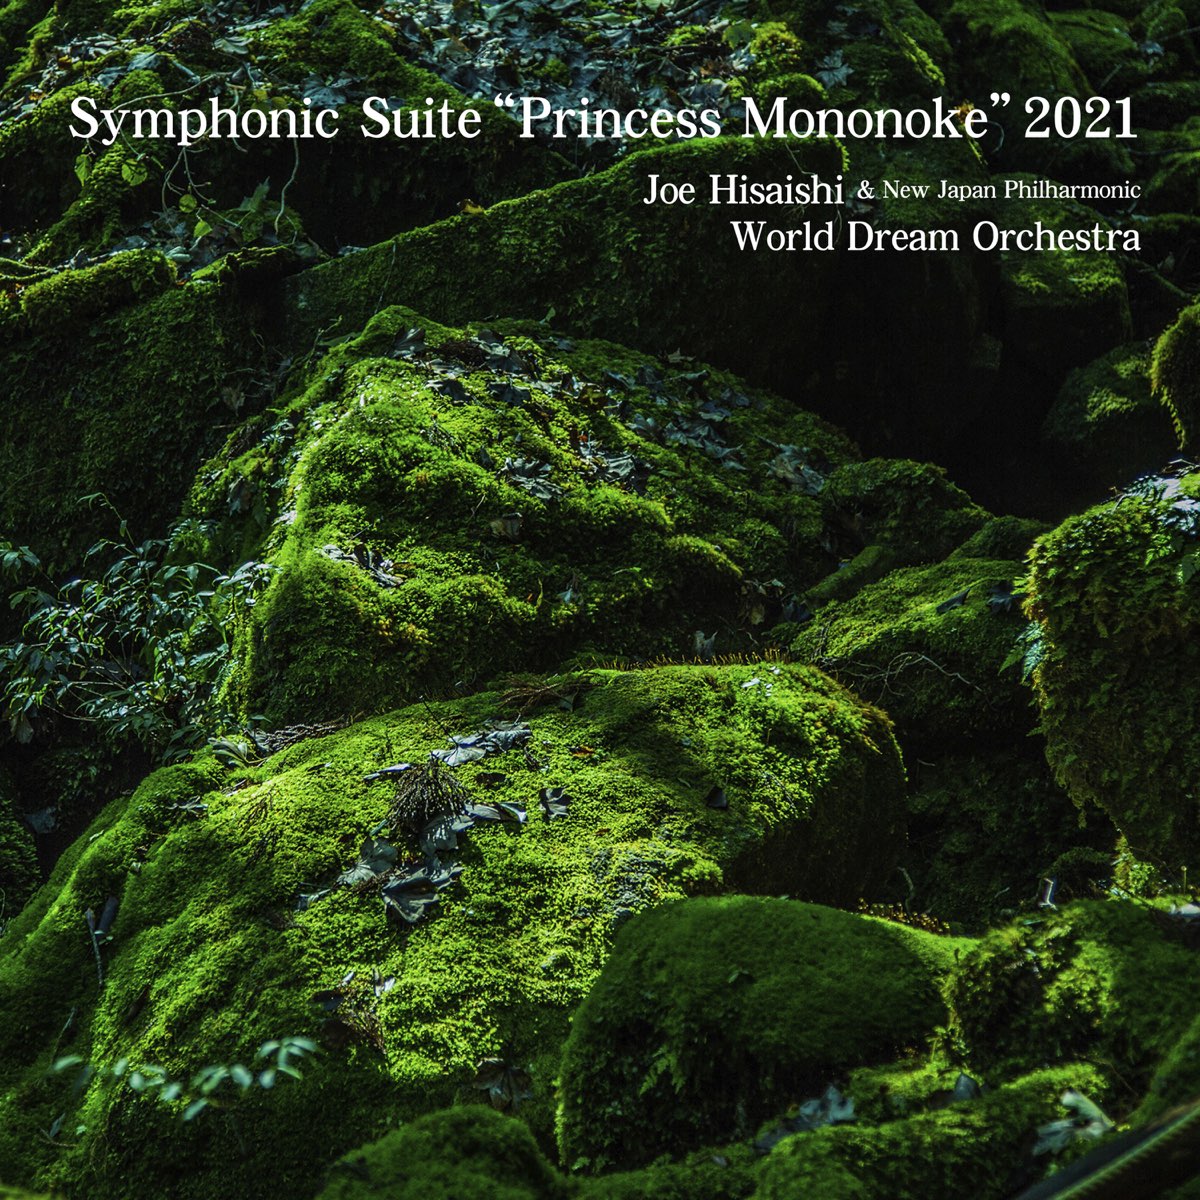 Dream orchestra. New Japan Philharmonic World Dream Orchestra Joe Hisaishi. New Japan Philharmonic World Dream Orchestra. Symphonic Suite Part 2 6th. Dream Worlds.